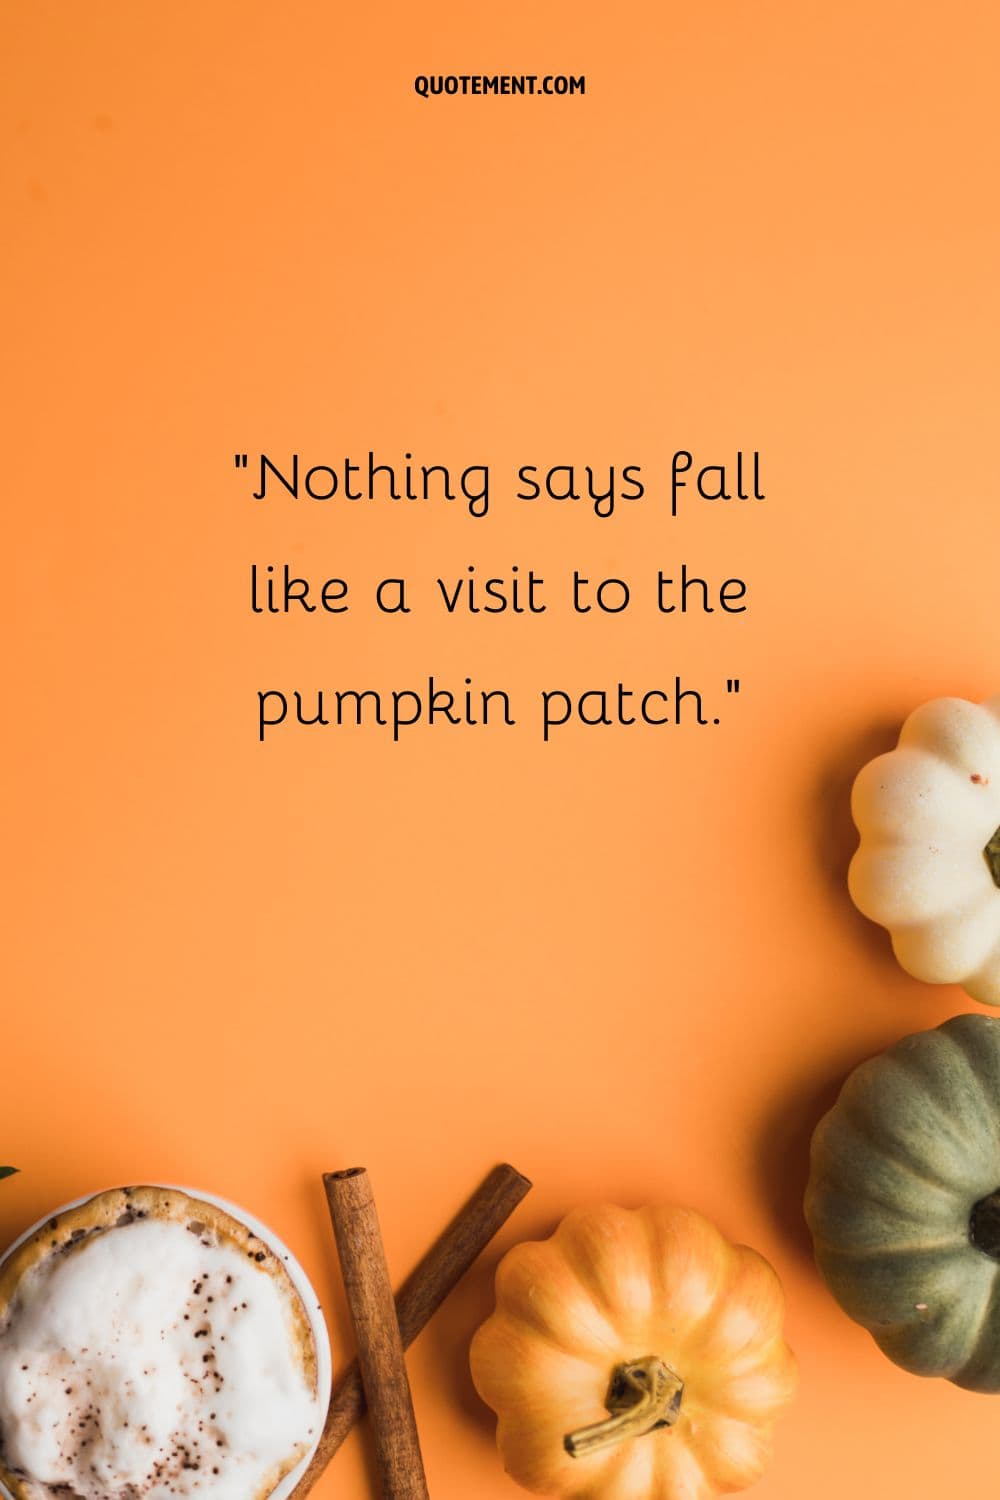 Cinnamon and pumpkins, a perfect autumn synergy.
